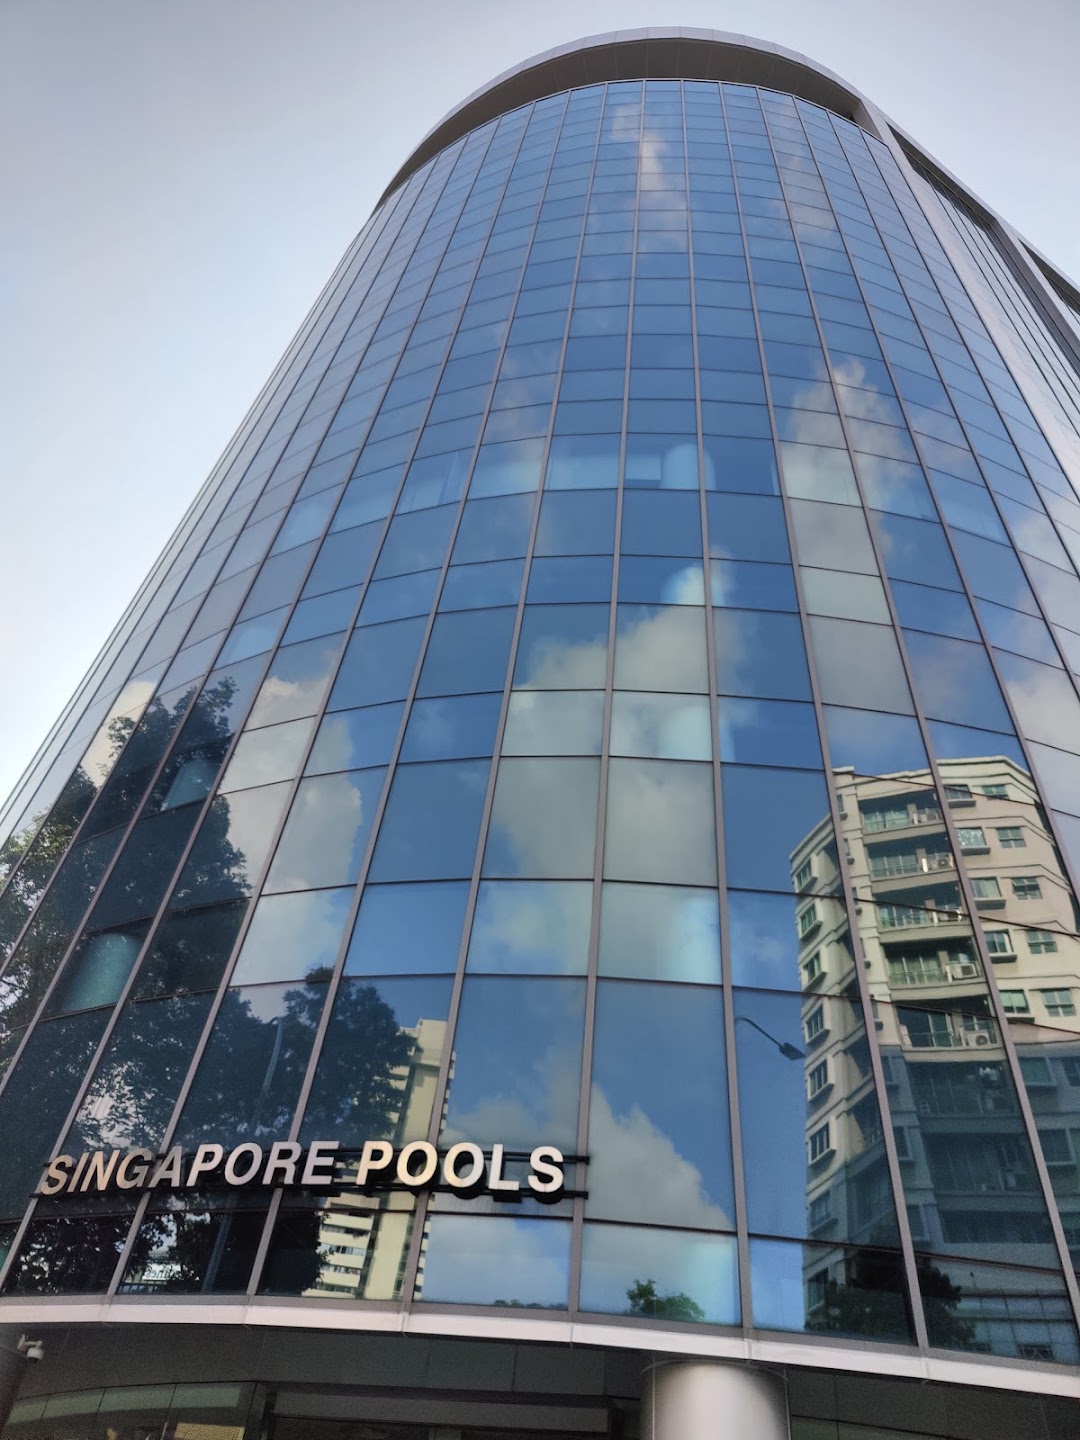 Singapore Pools Main Branch